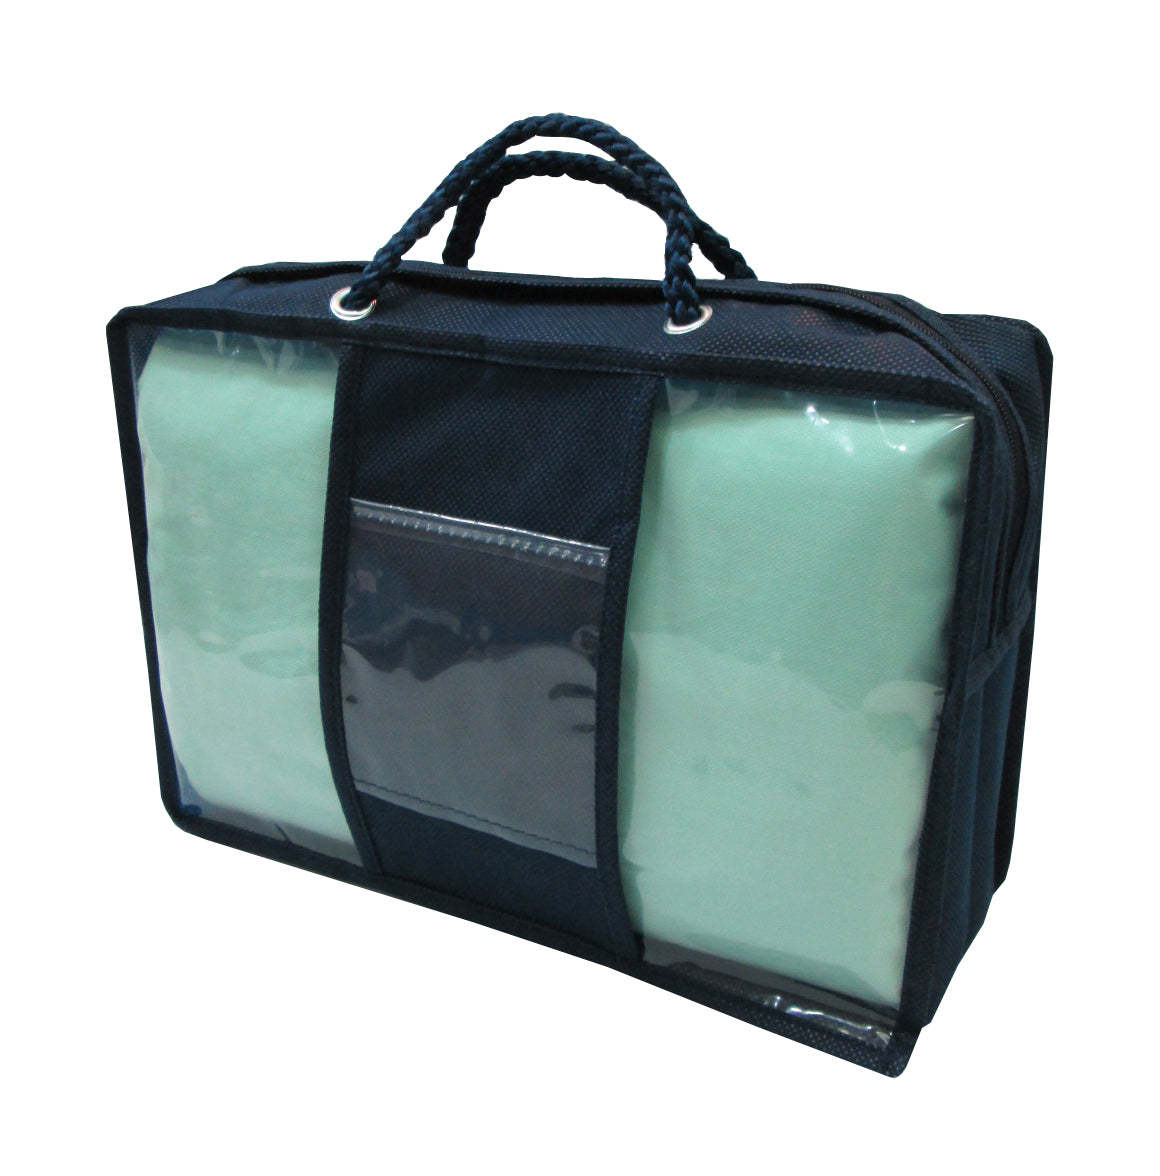 JLSB-0009 Sewn Bag